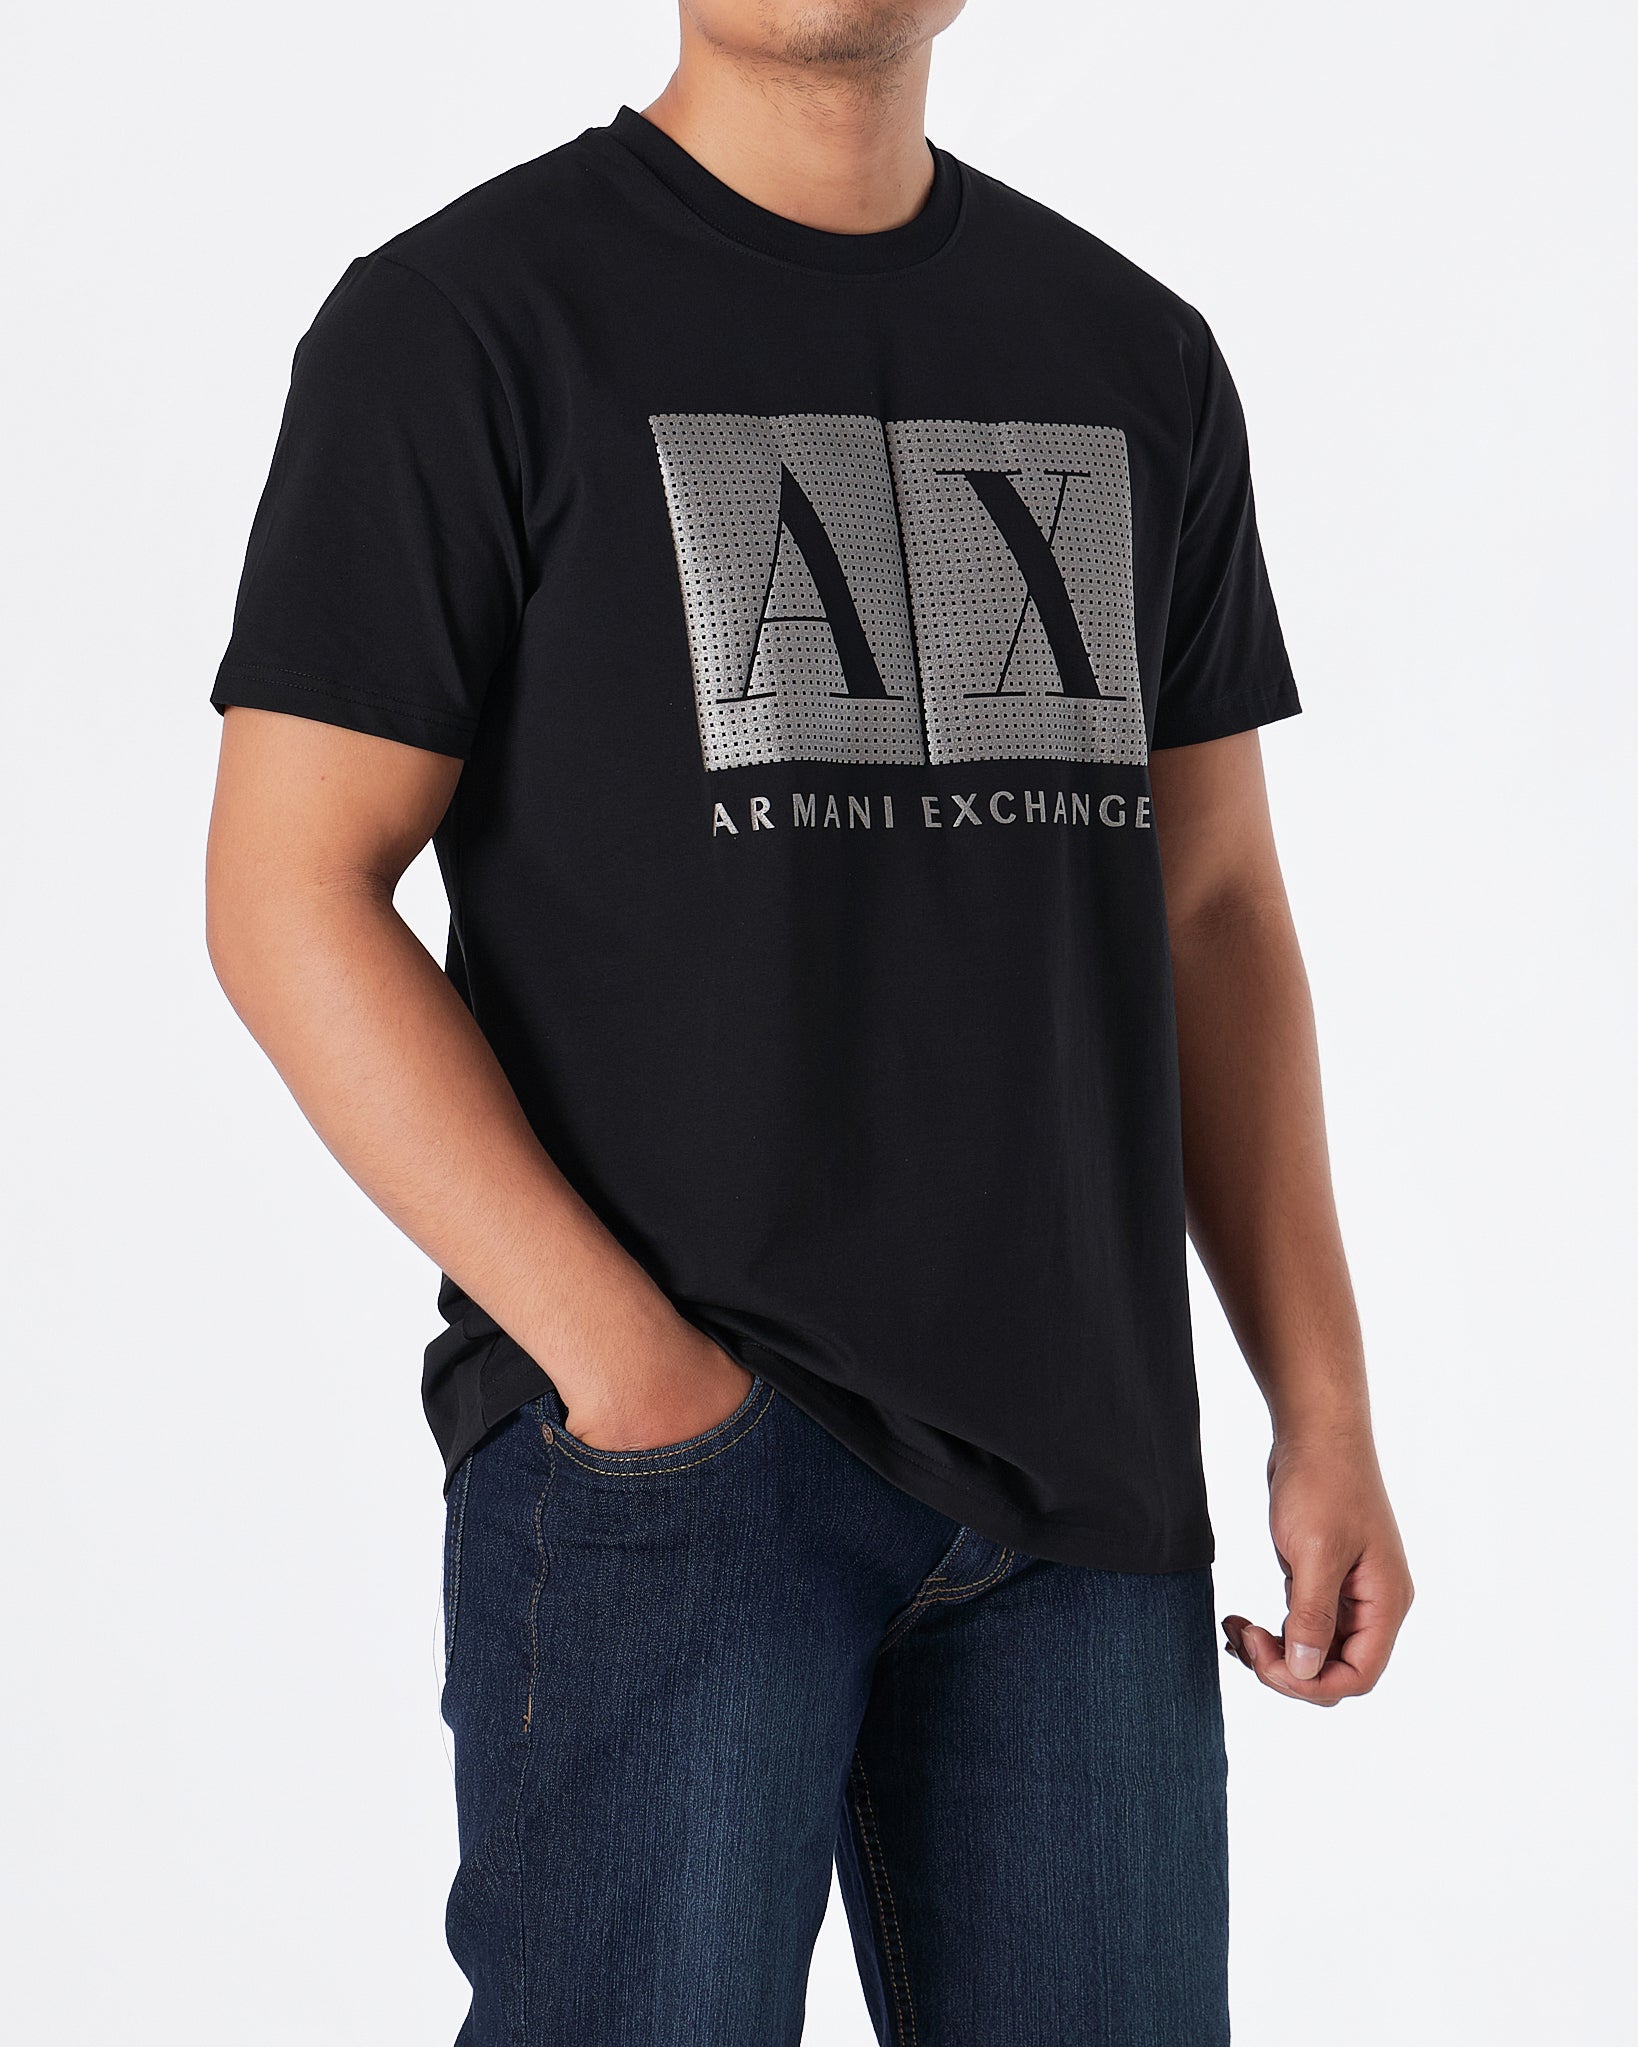 MOI OUTFIT-ARM Exchange Men Black T-Shirt 17.90